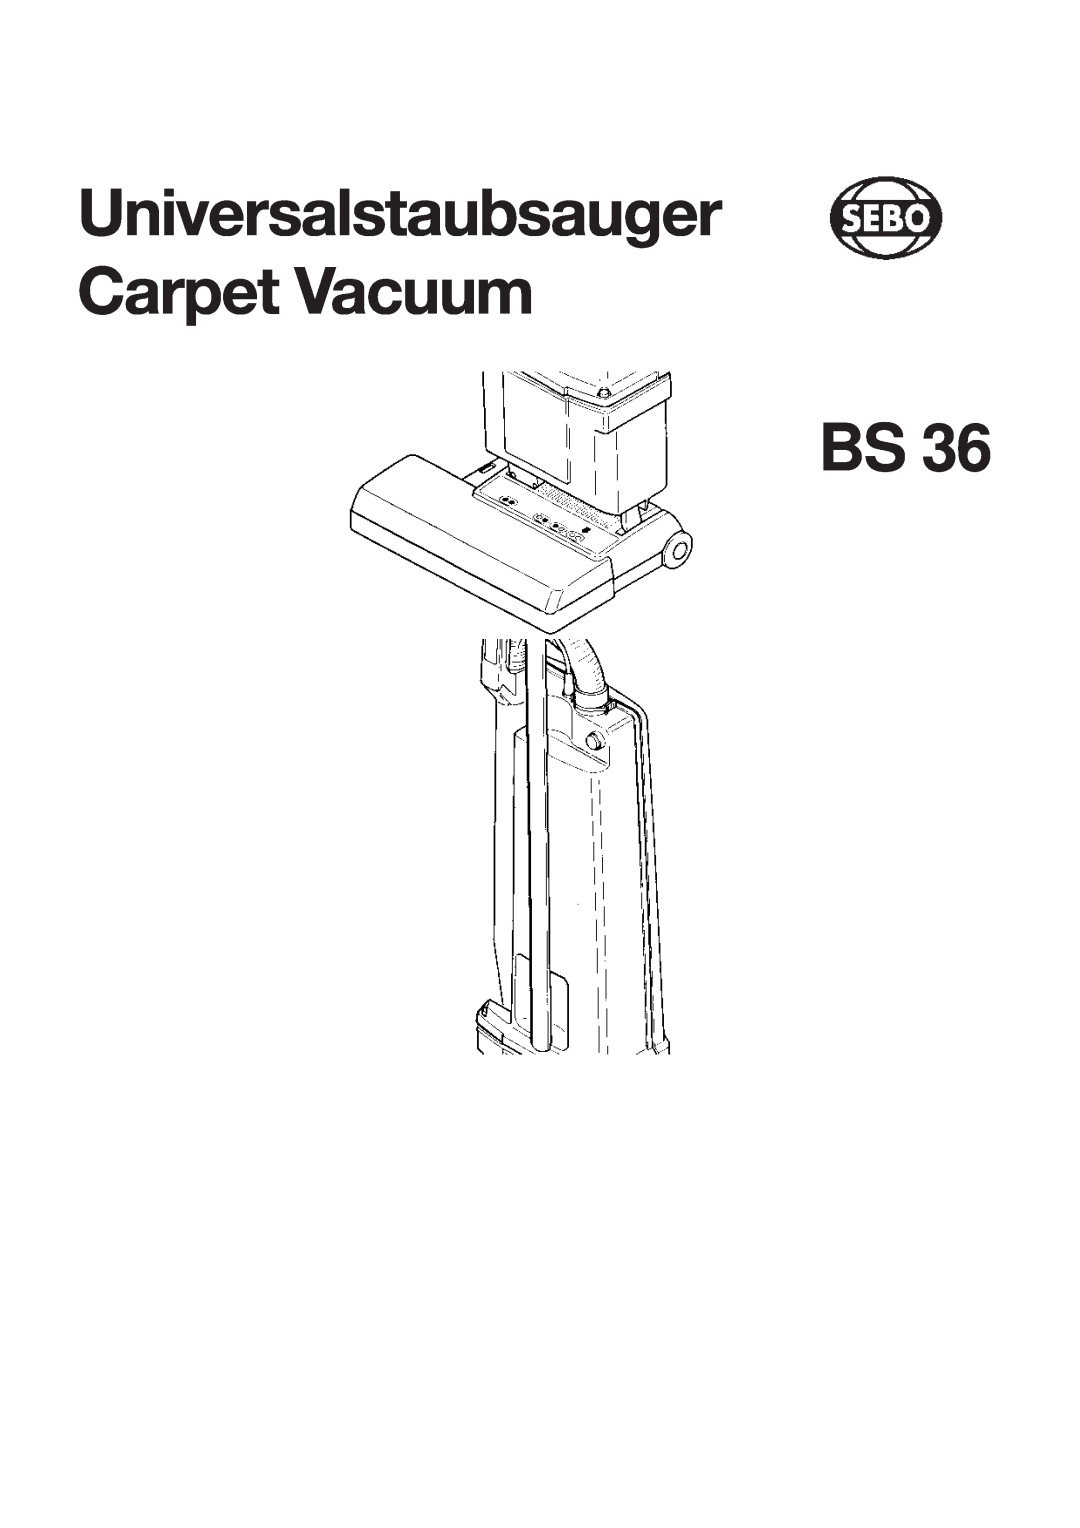 Sebo BS 36 manual Universalstaubsauger Carpet Vacuum BS 